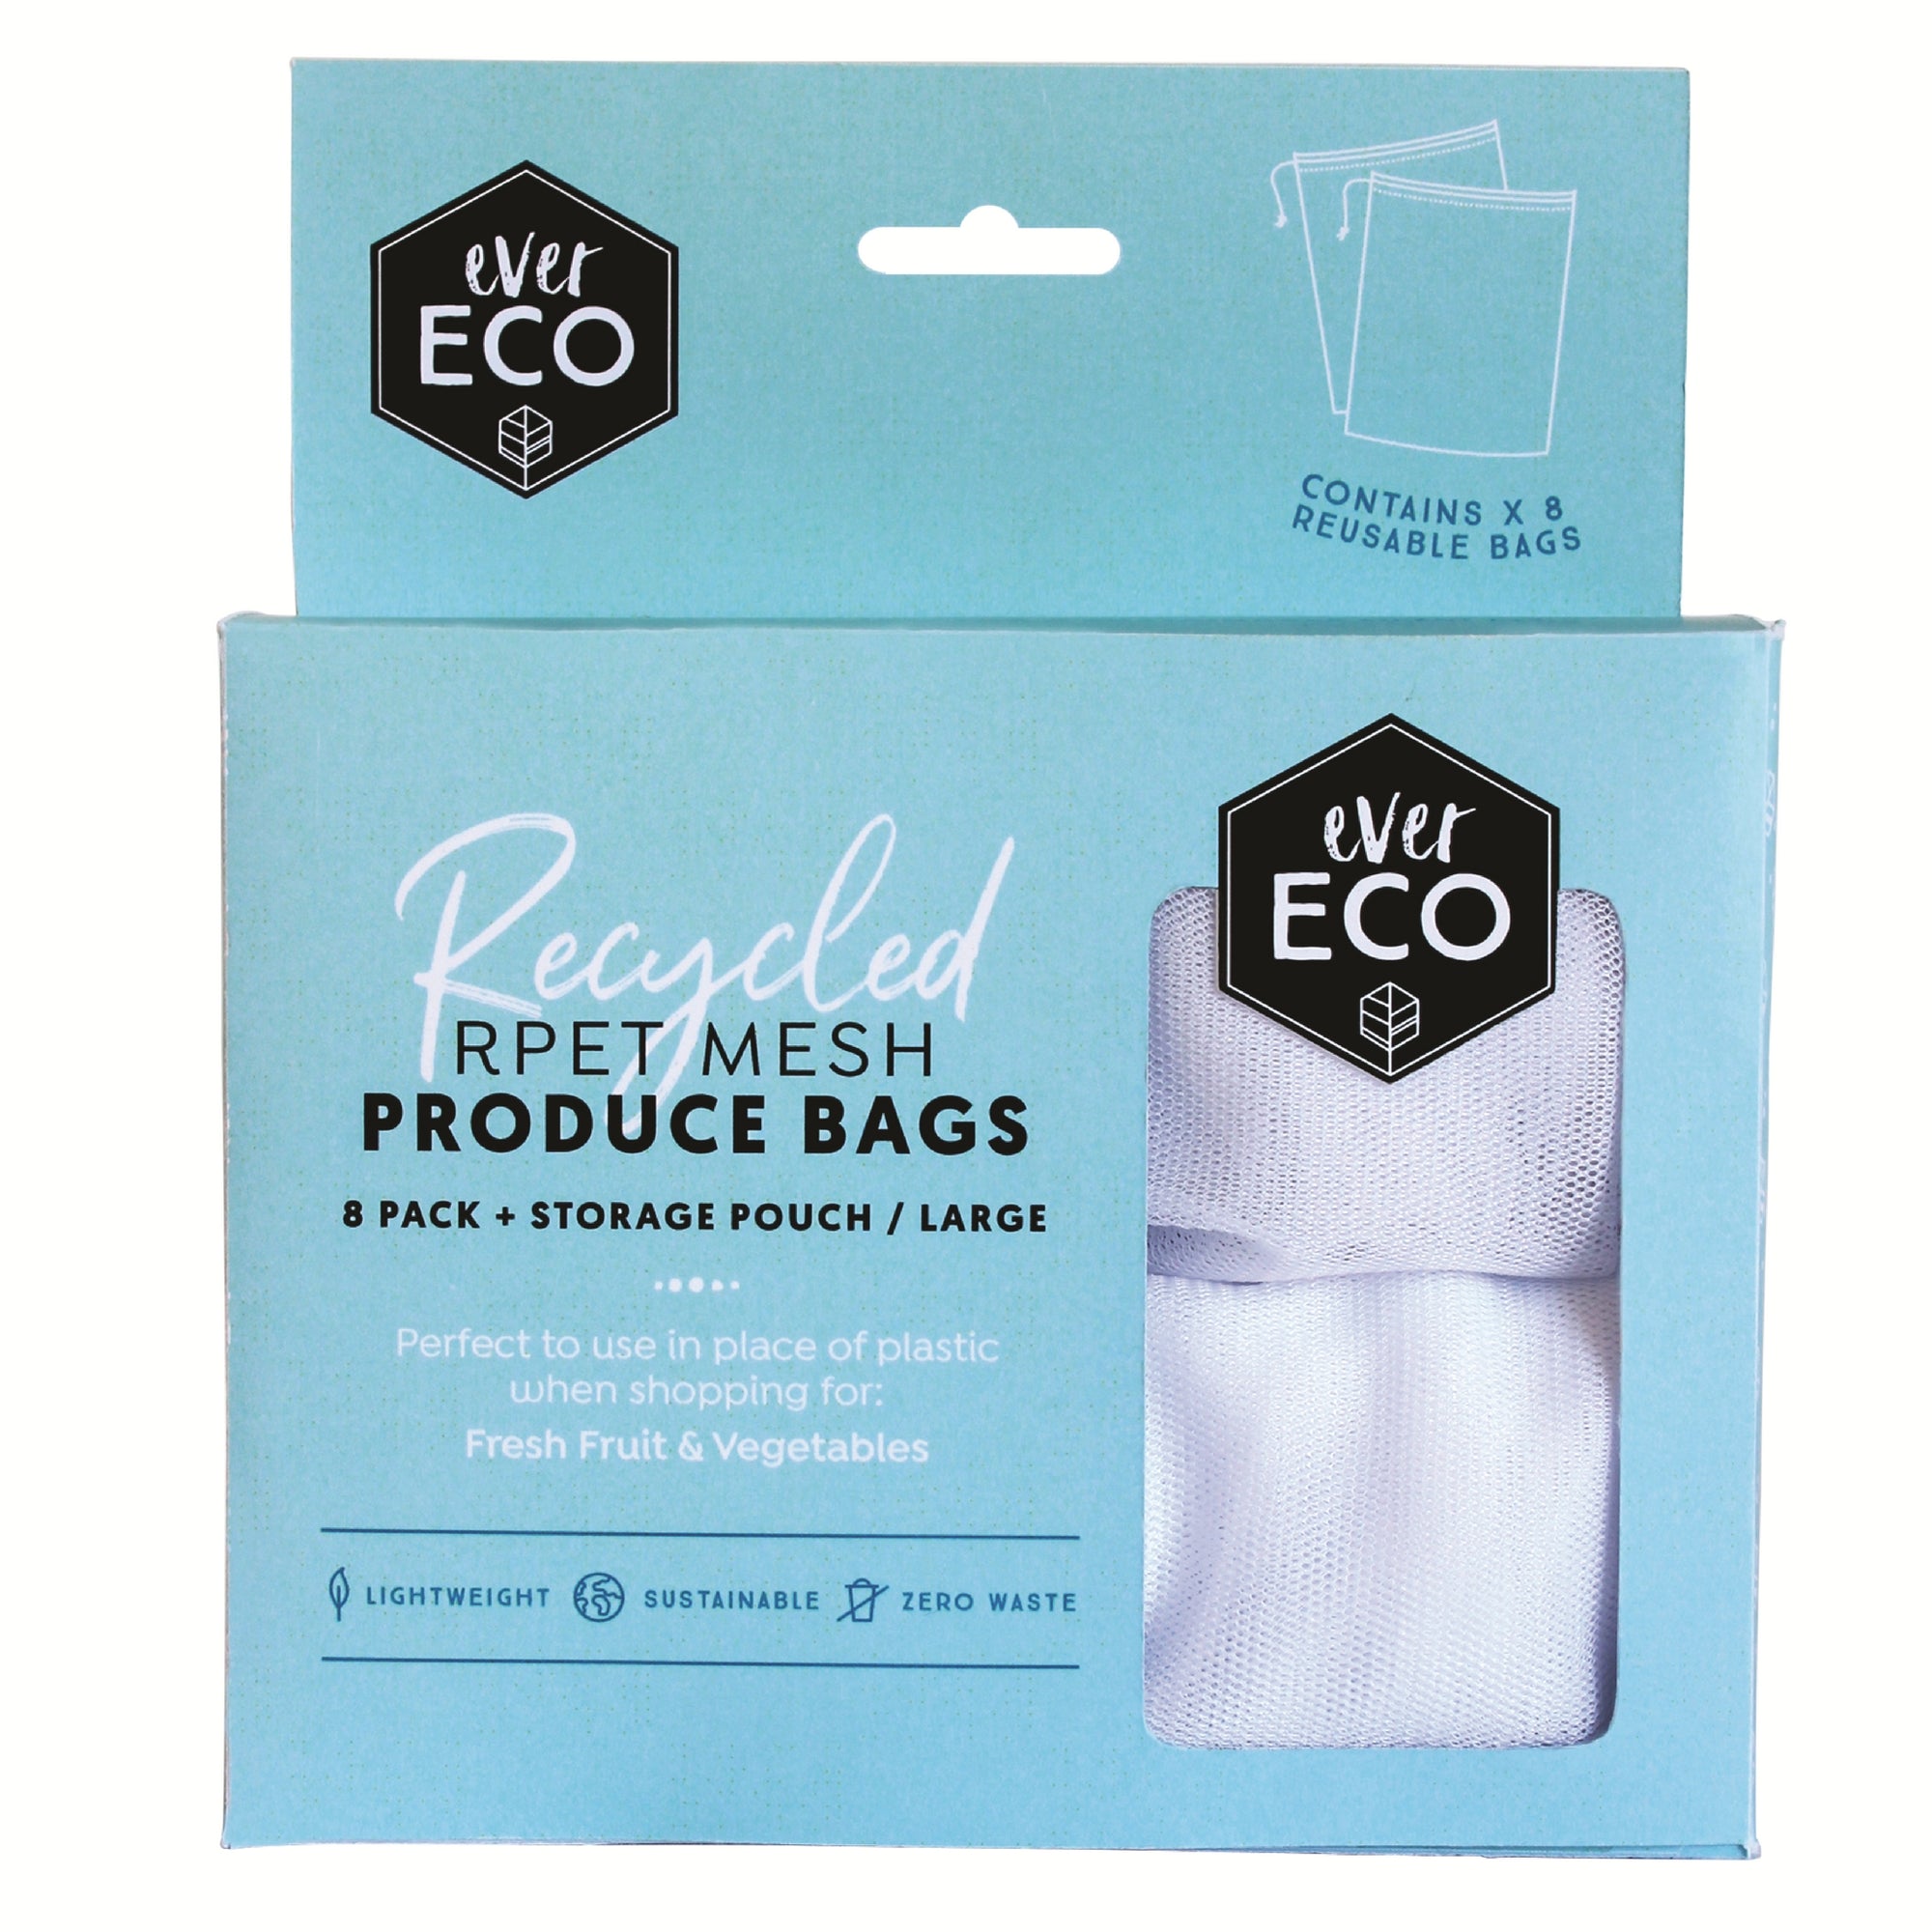 Go-For-Zero-Australia-Ever-Eco-Reusable-Produce-Bags-RPET-Mesh-8-Pack-Storage-Pouch